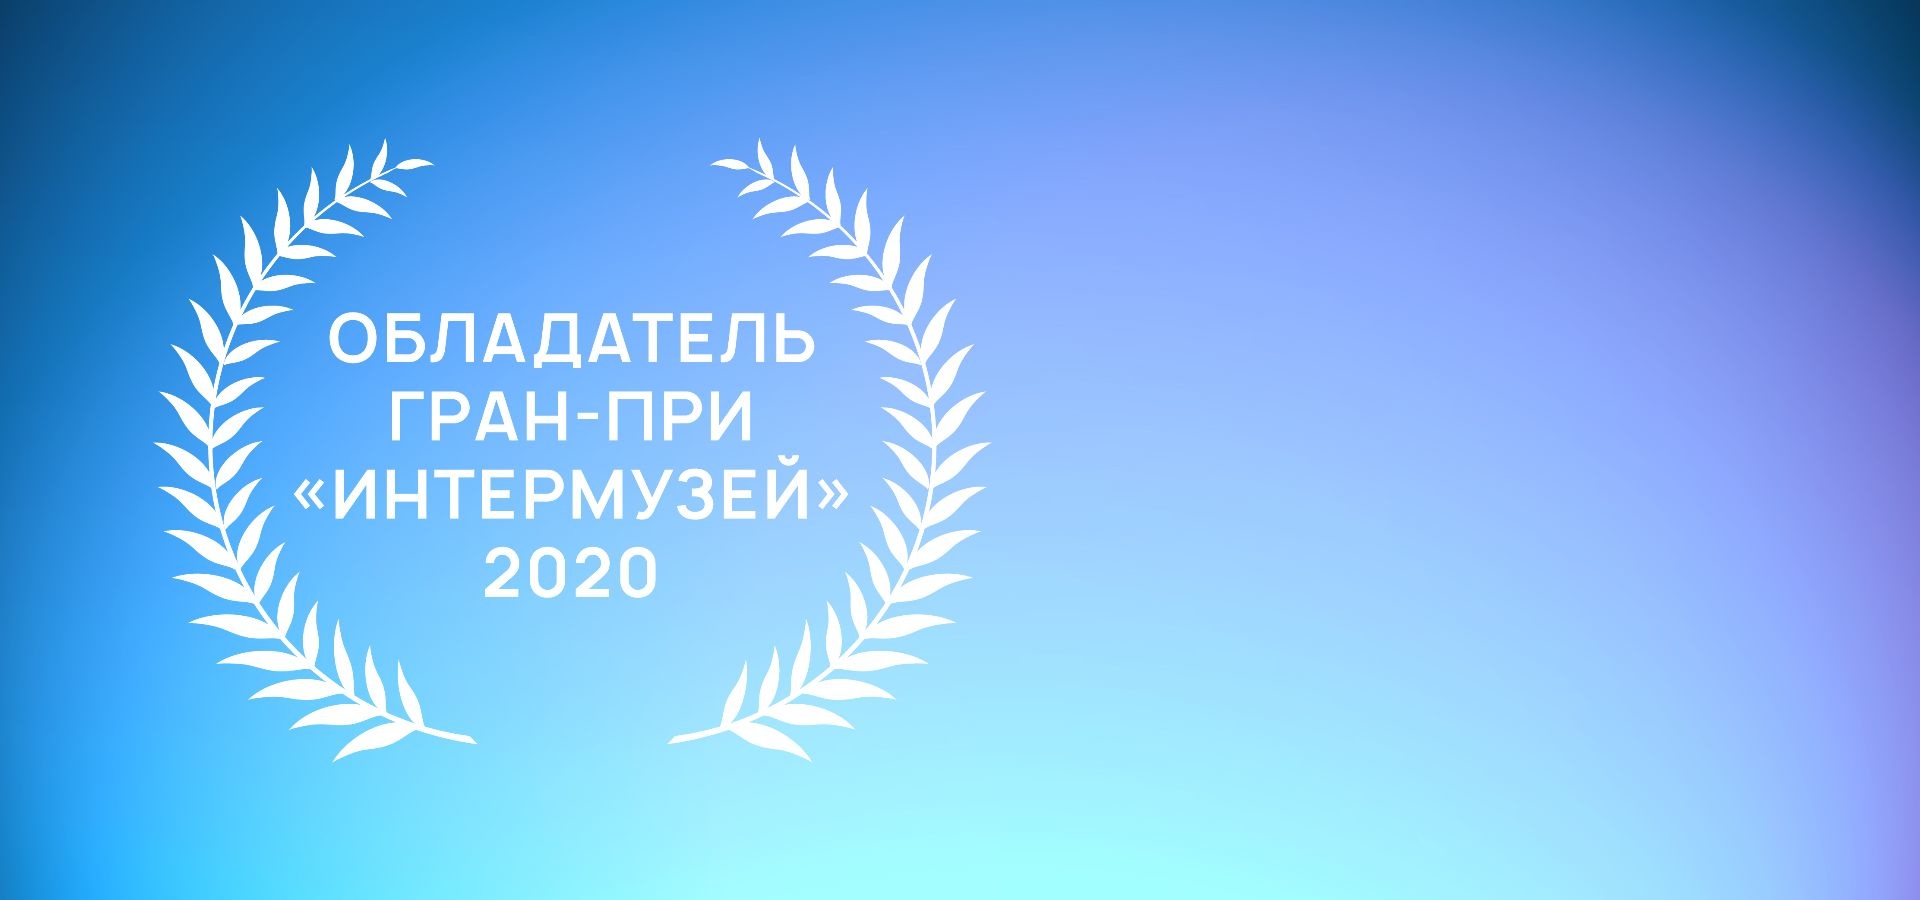 ИНТЕРМУЗЕЙ 2020